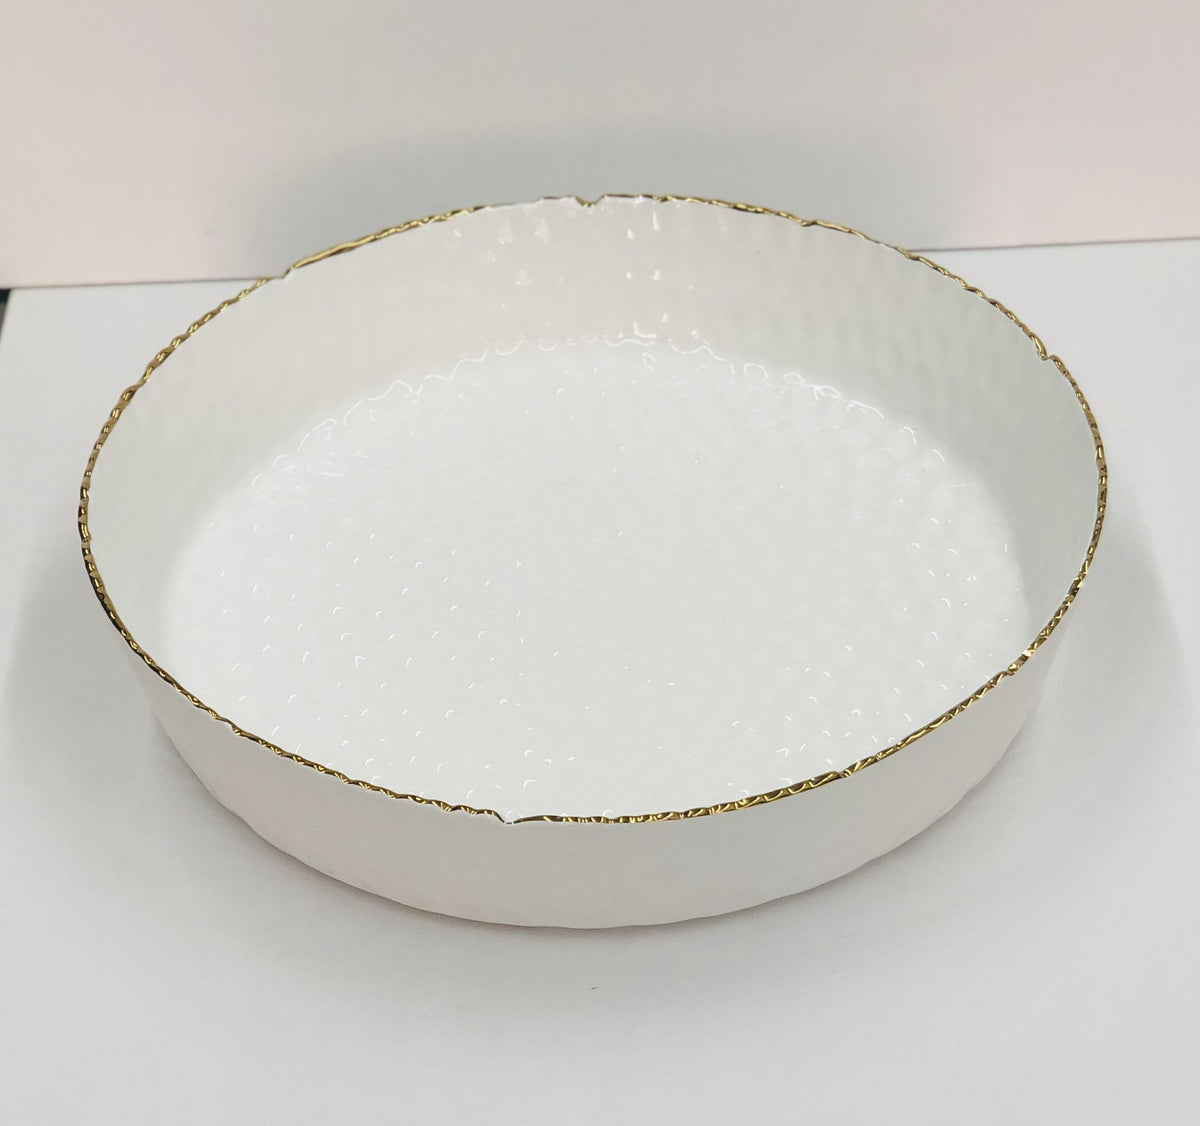 Joseph Sedgh Ceramic Serving Bowl, Pebbled White with Gold Rim